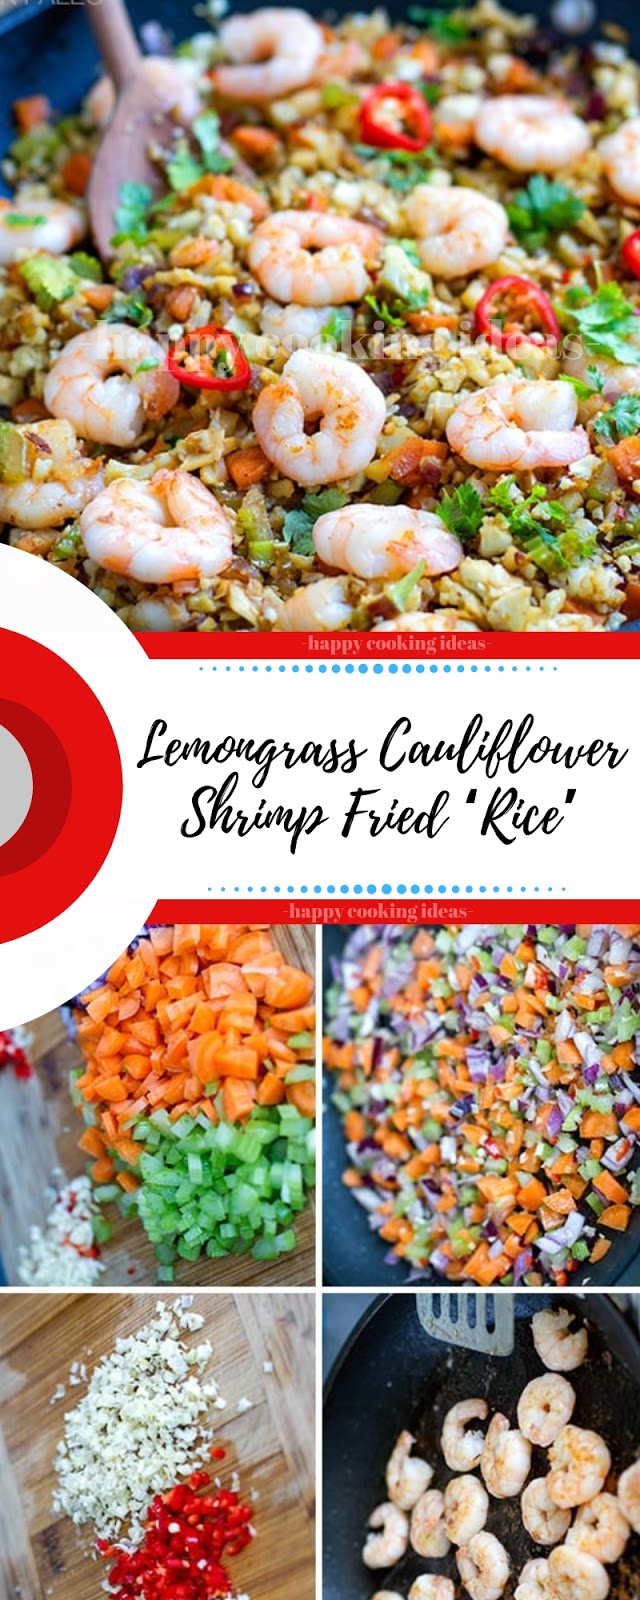 Lemongrass Cauliflower Shrimp Fried ‘Rice’